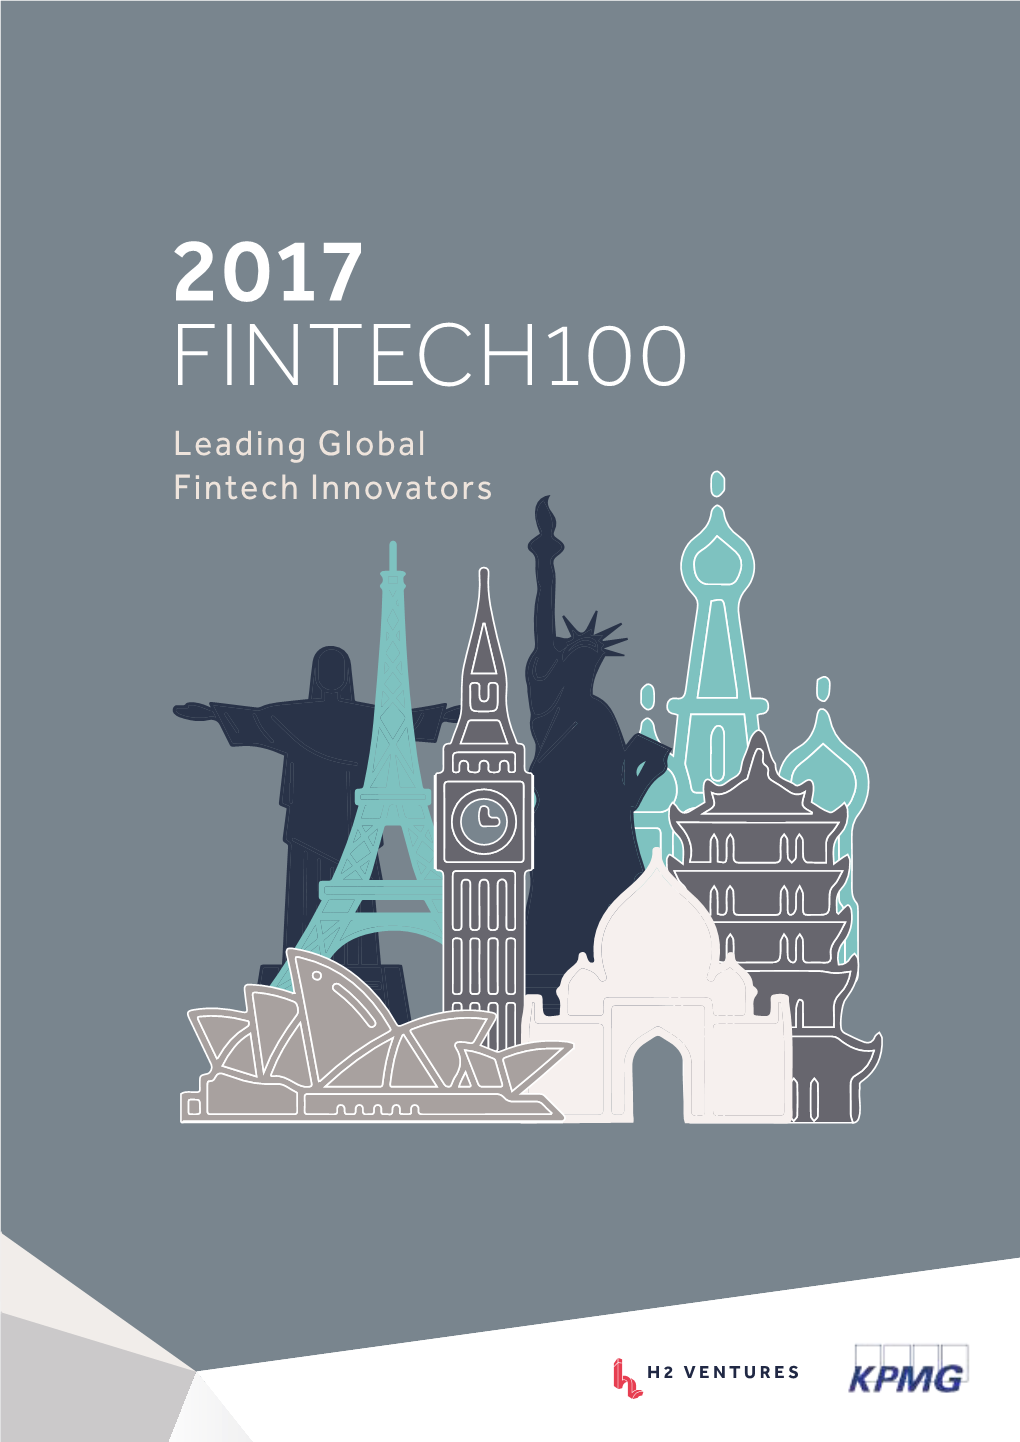 FINTECH100 – Leading Global Fintech Innovators